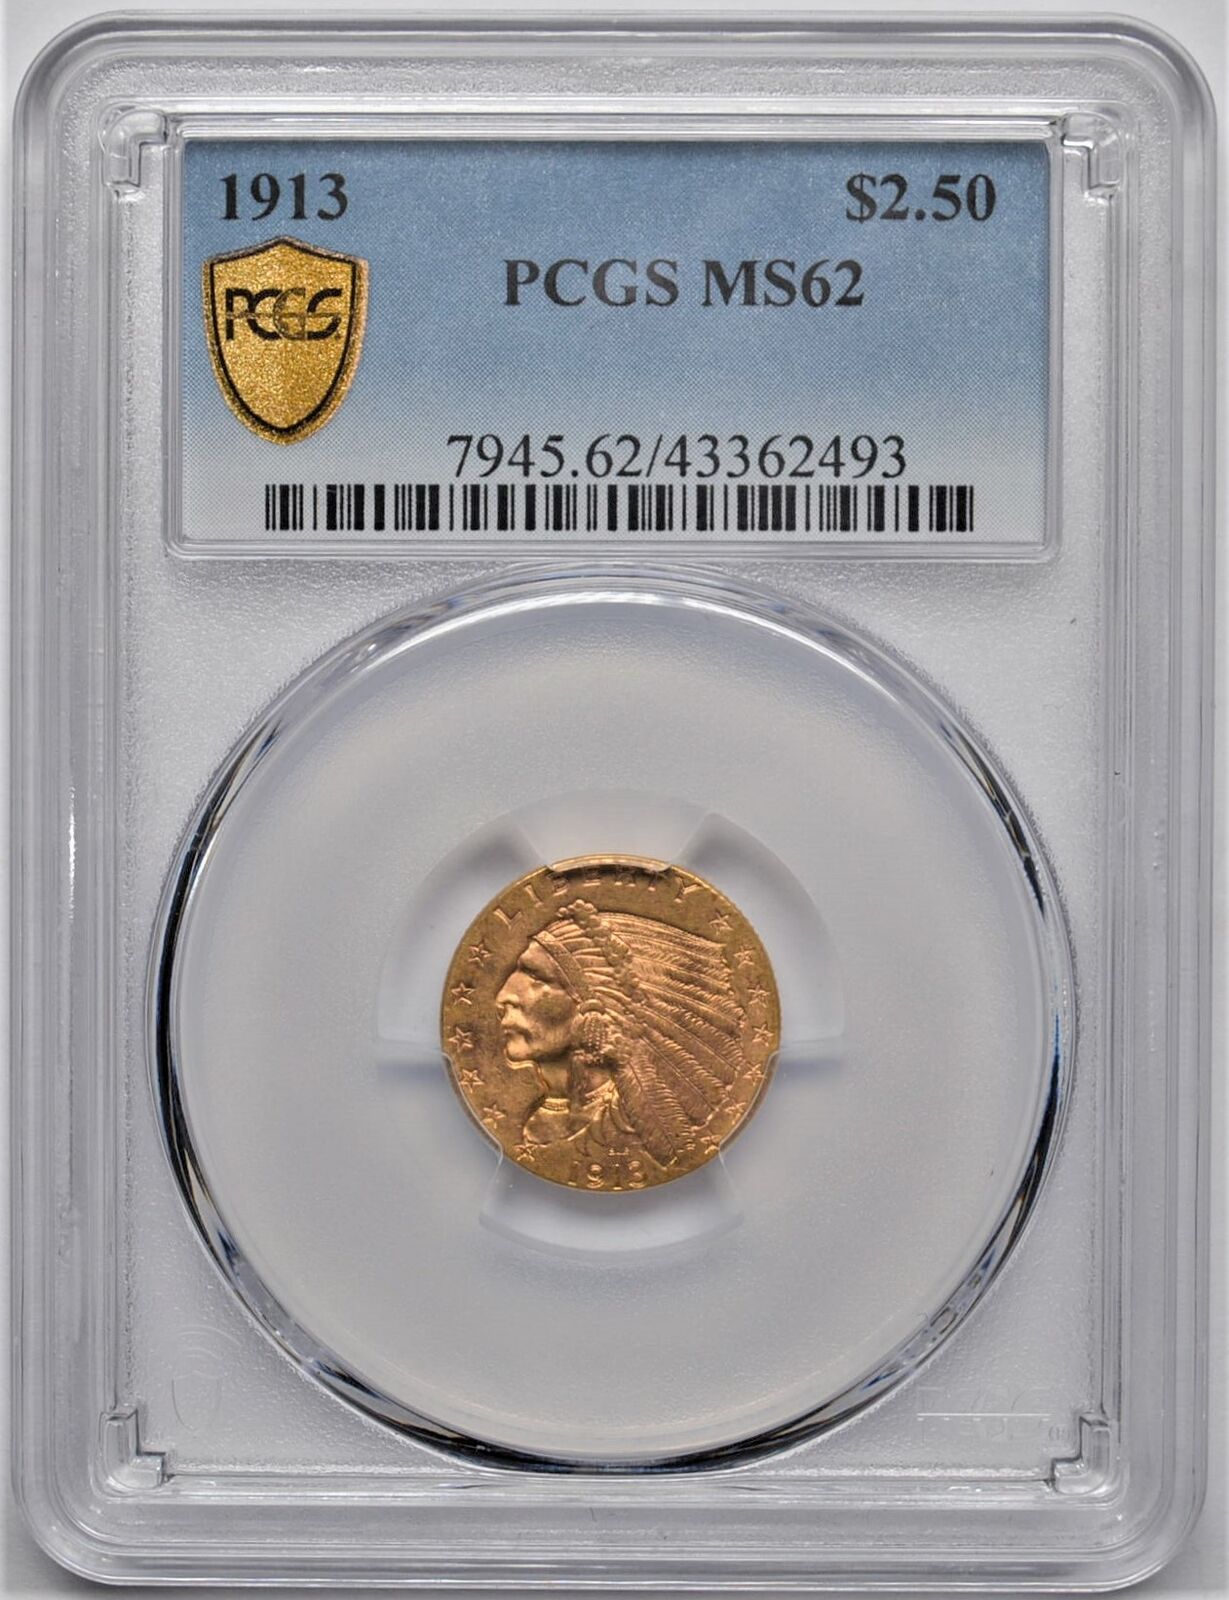 1913 Indian Head Gold Quarter Eagle $2.50 Pcgs Ms 62